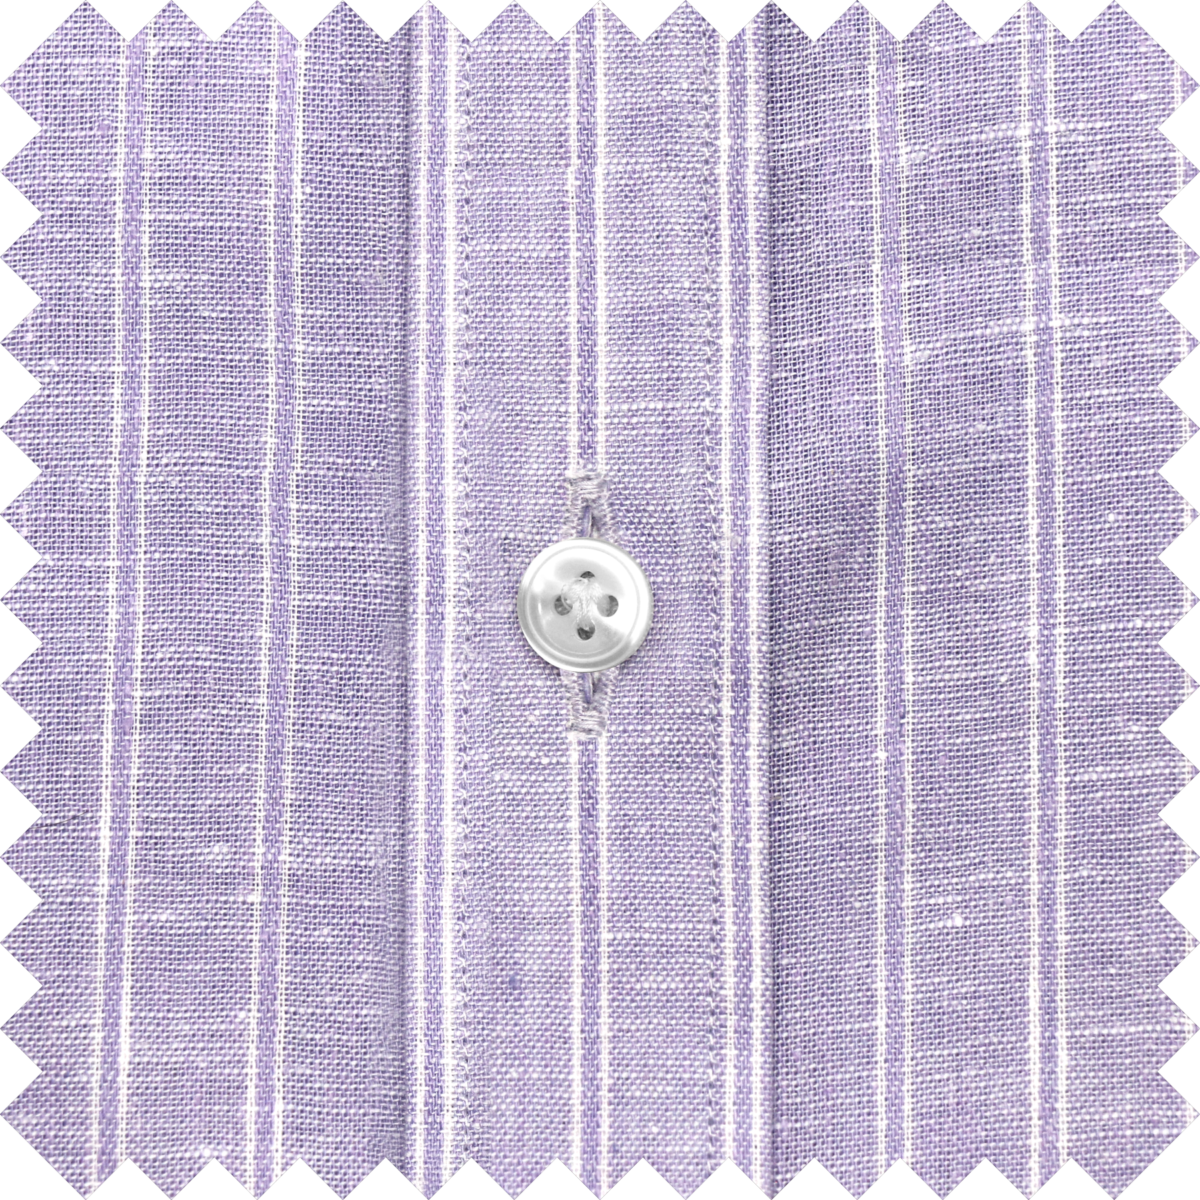 Lilac White sTripes High Button down collar men's cotton shirt, made to measure by John Clothier London